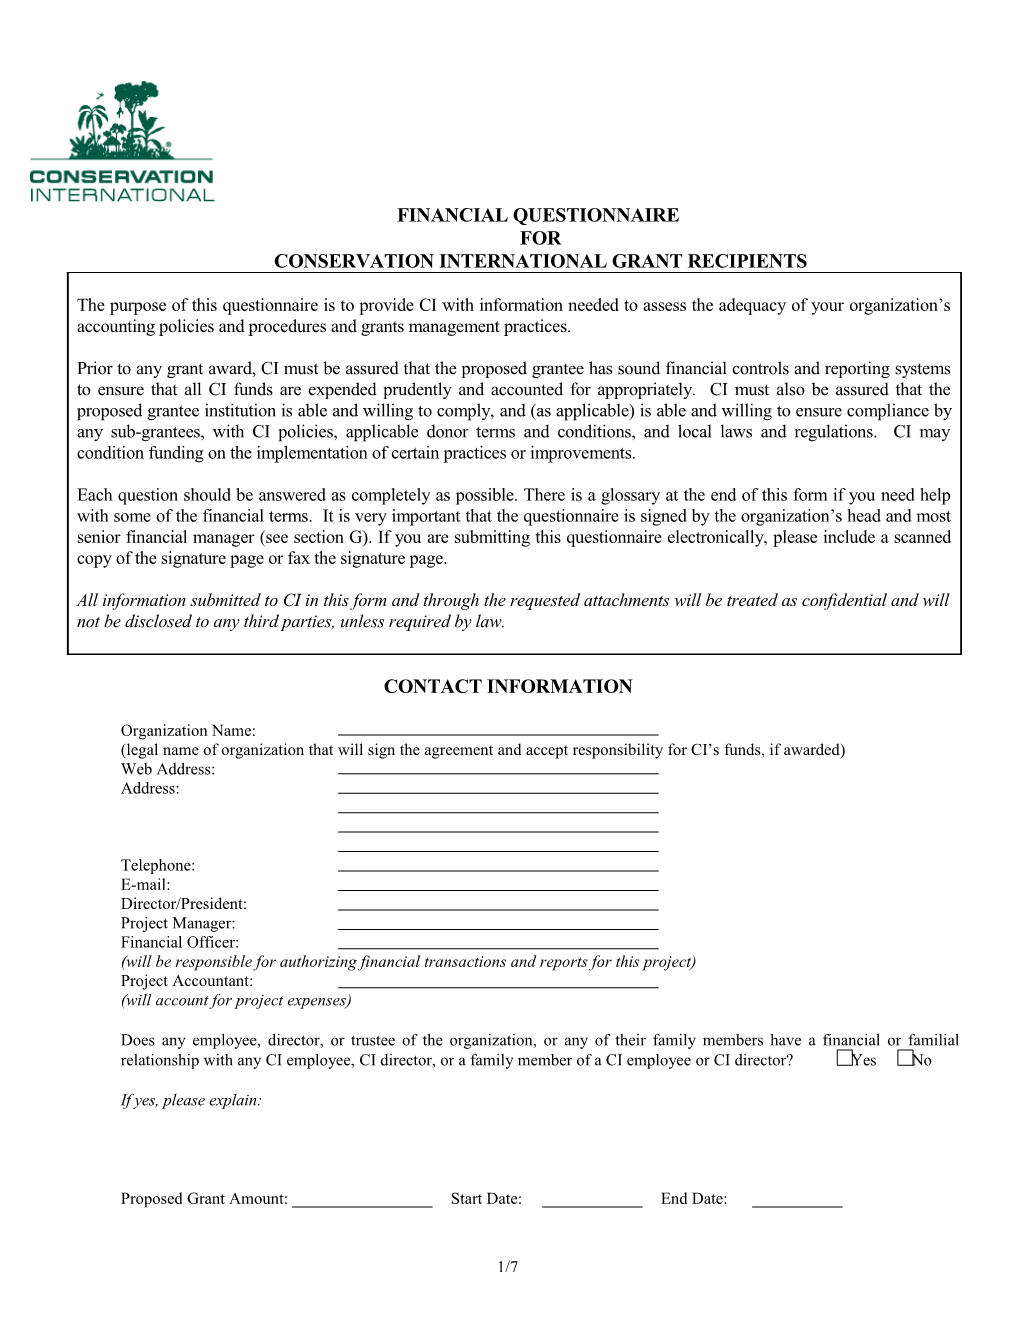 Financial Questionnaire for Grant Recipients